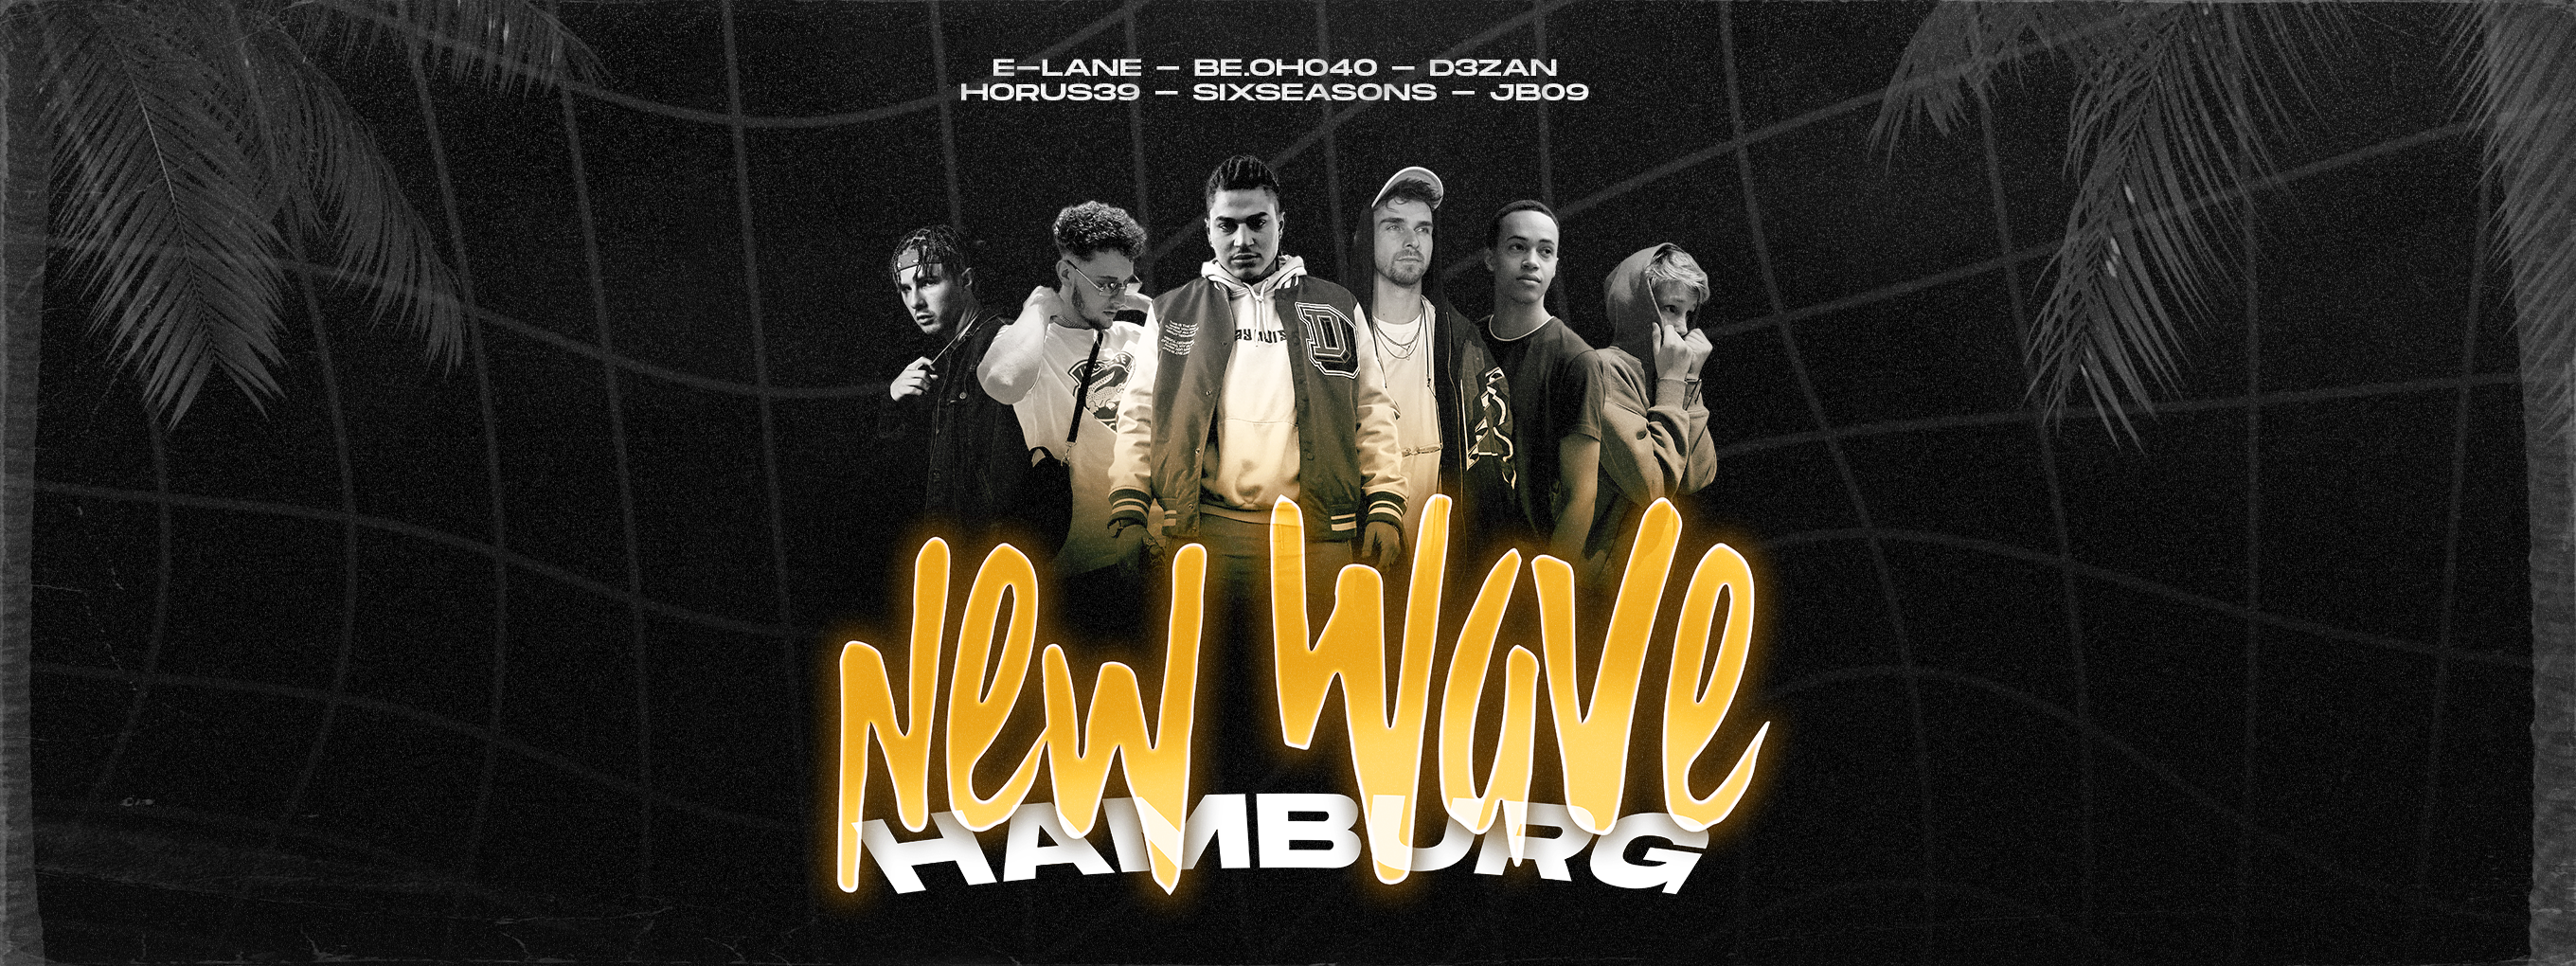 2023 new wave hamburg ticket header1 86684 New Wave Hamburg